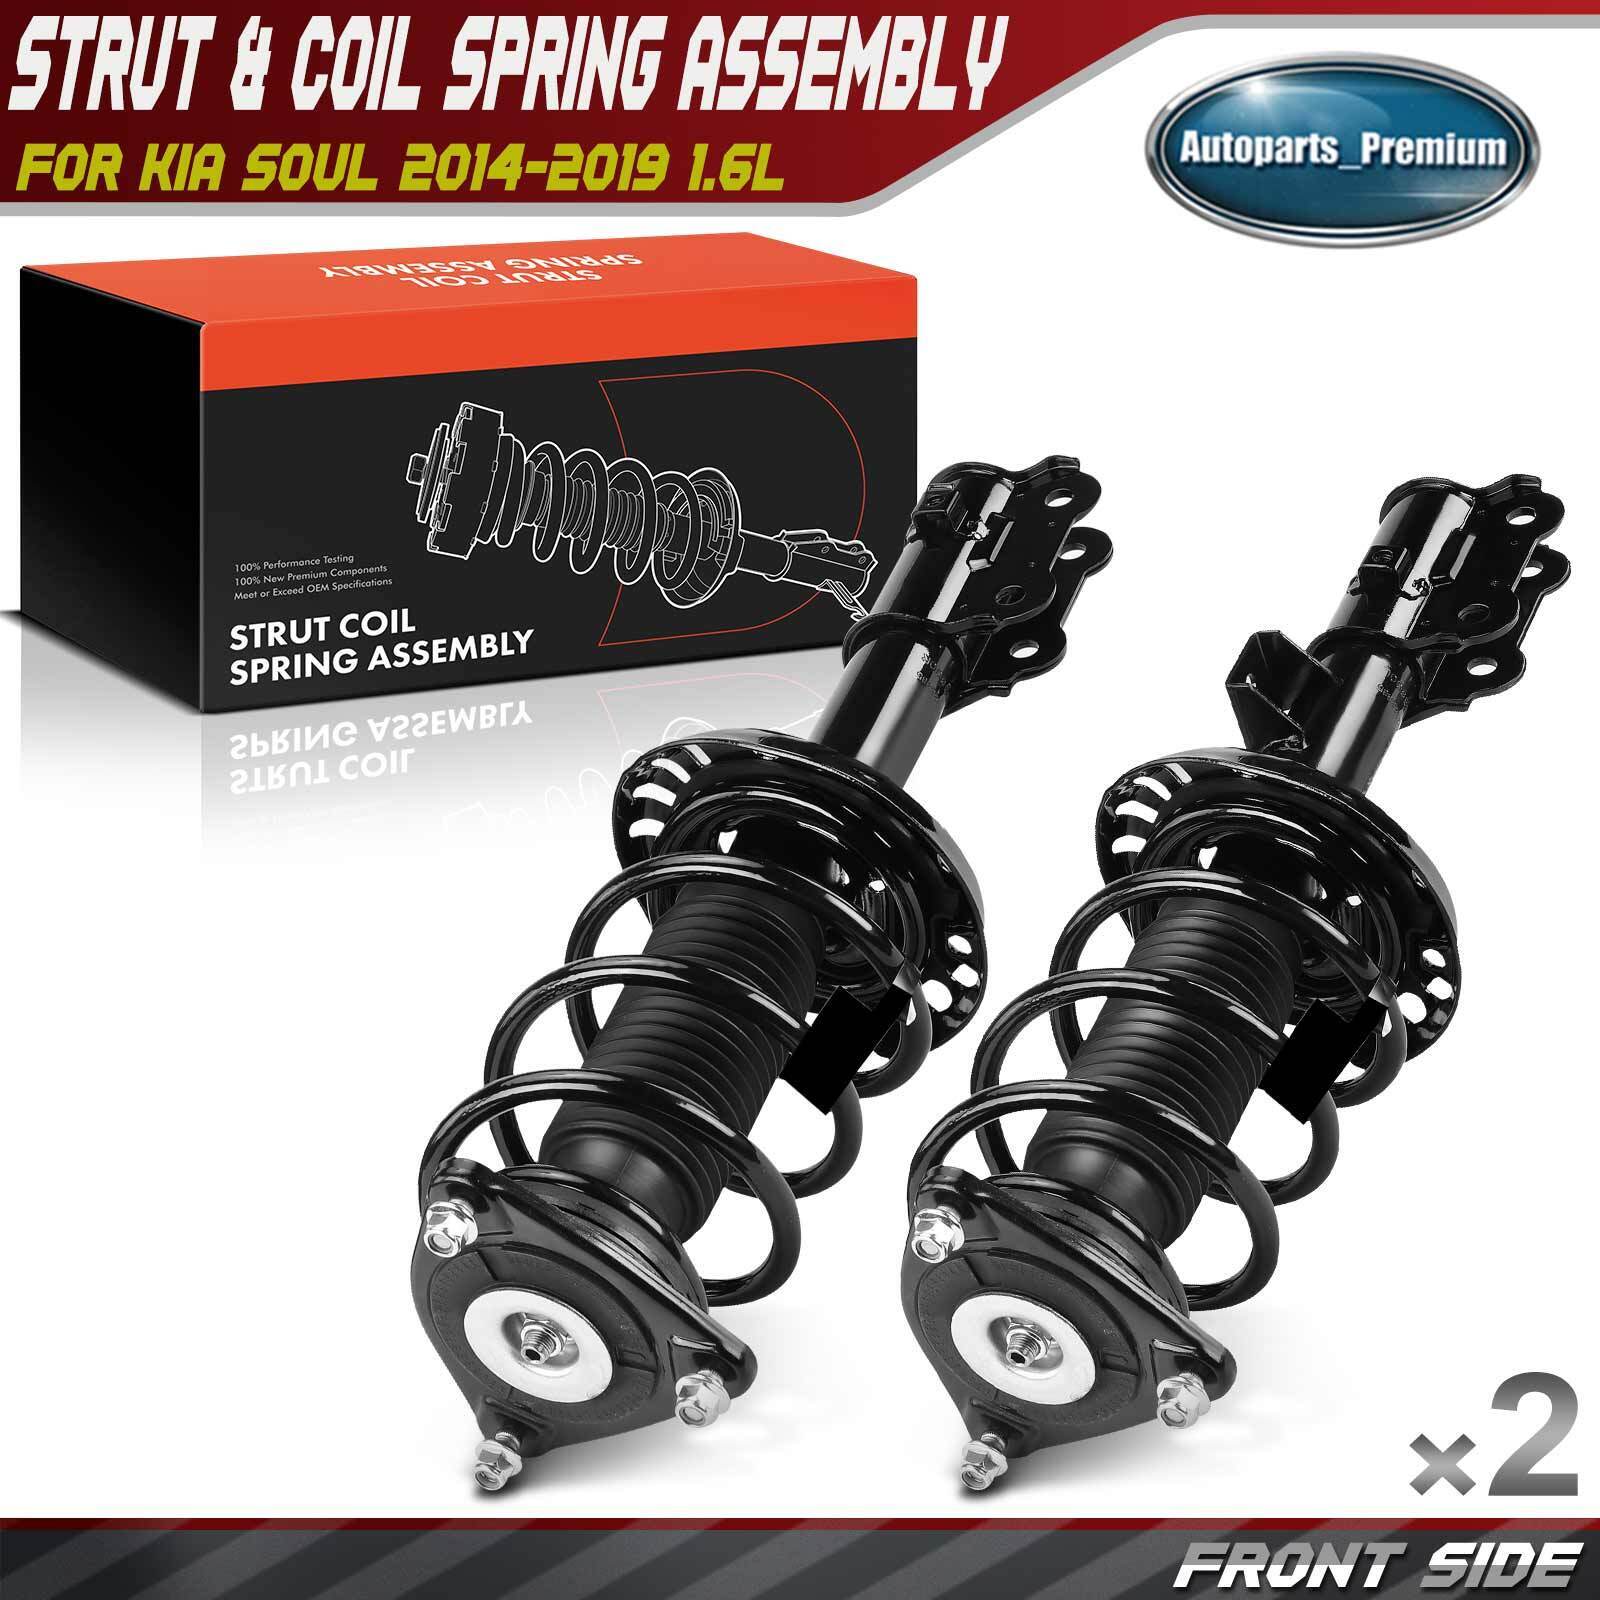 2x Front Complete Strut & Coil Spring Assembly for Kia Soul 2014-2019 1.6L 2.0L